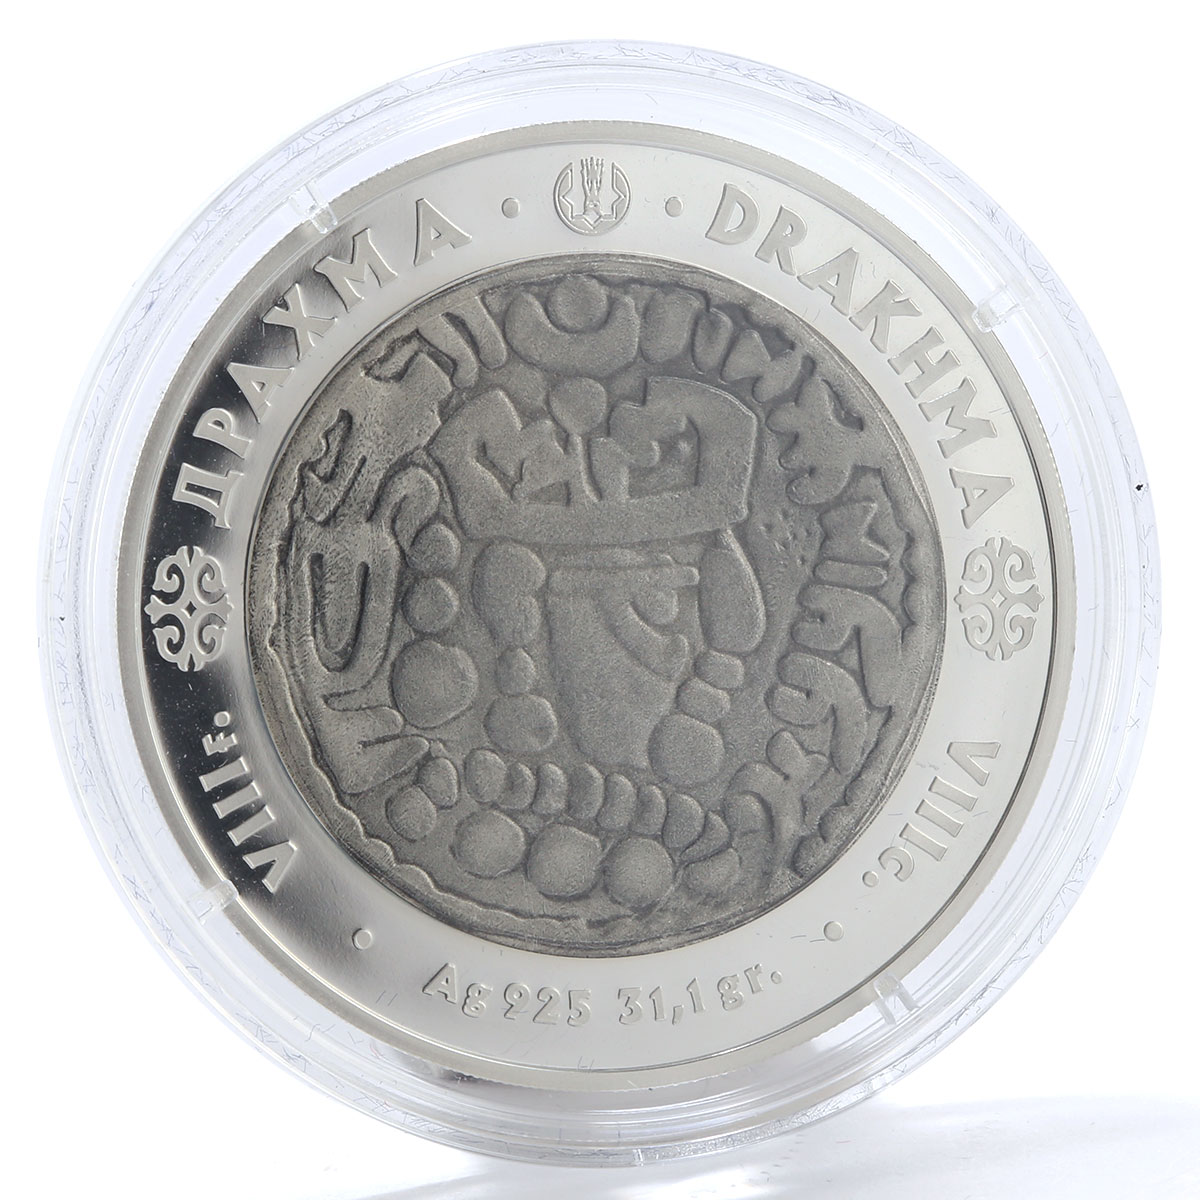 Kazakhstan 500 Tenge Drakhma proof silver coin 2005